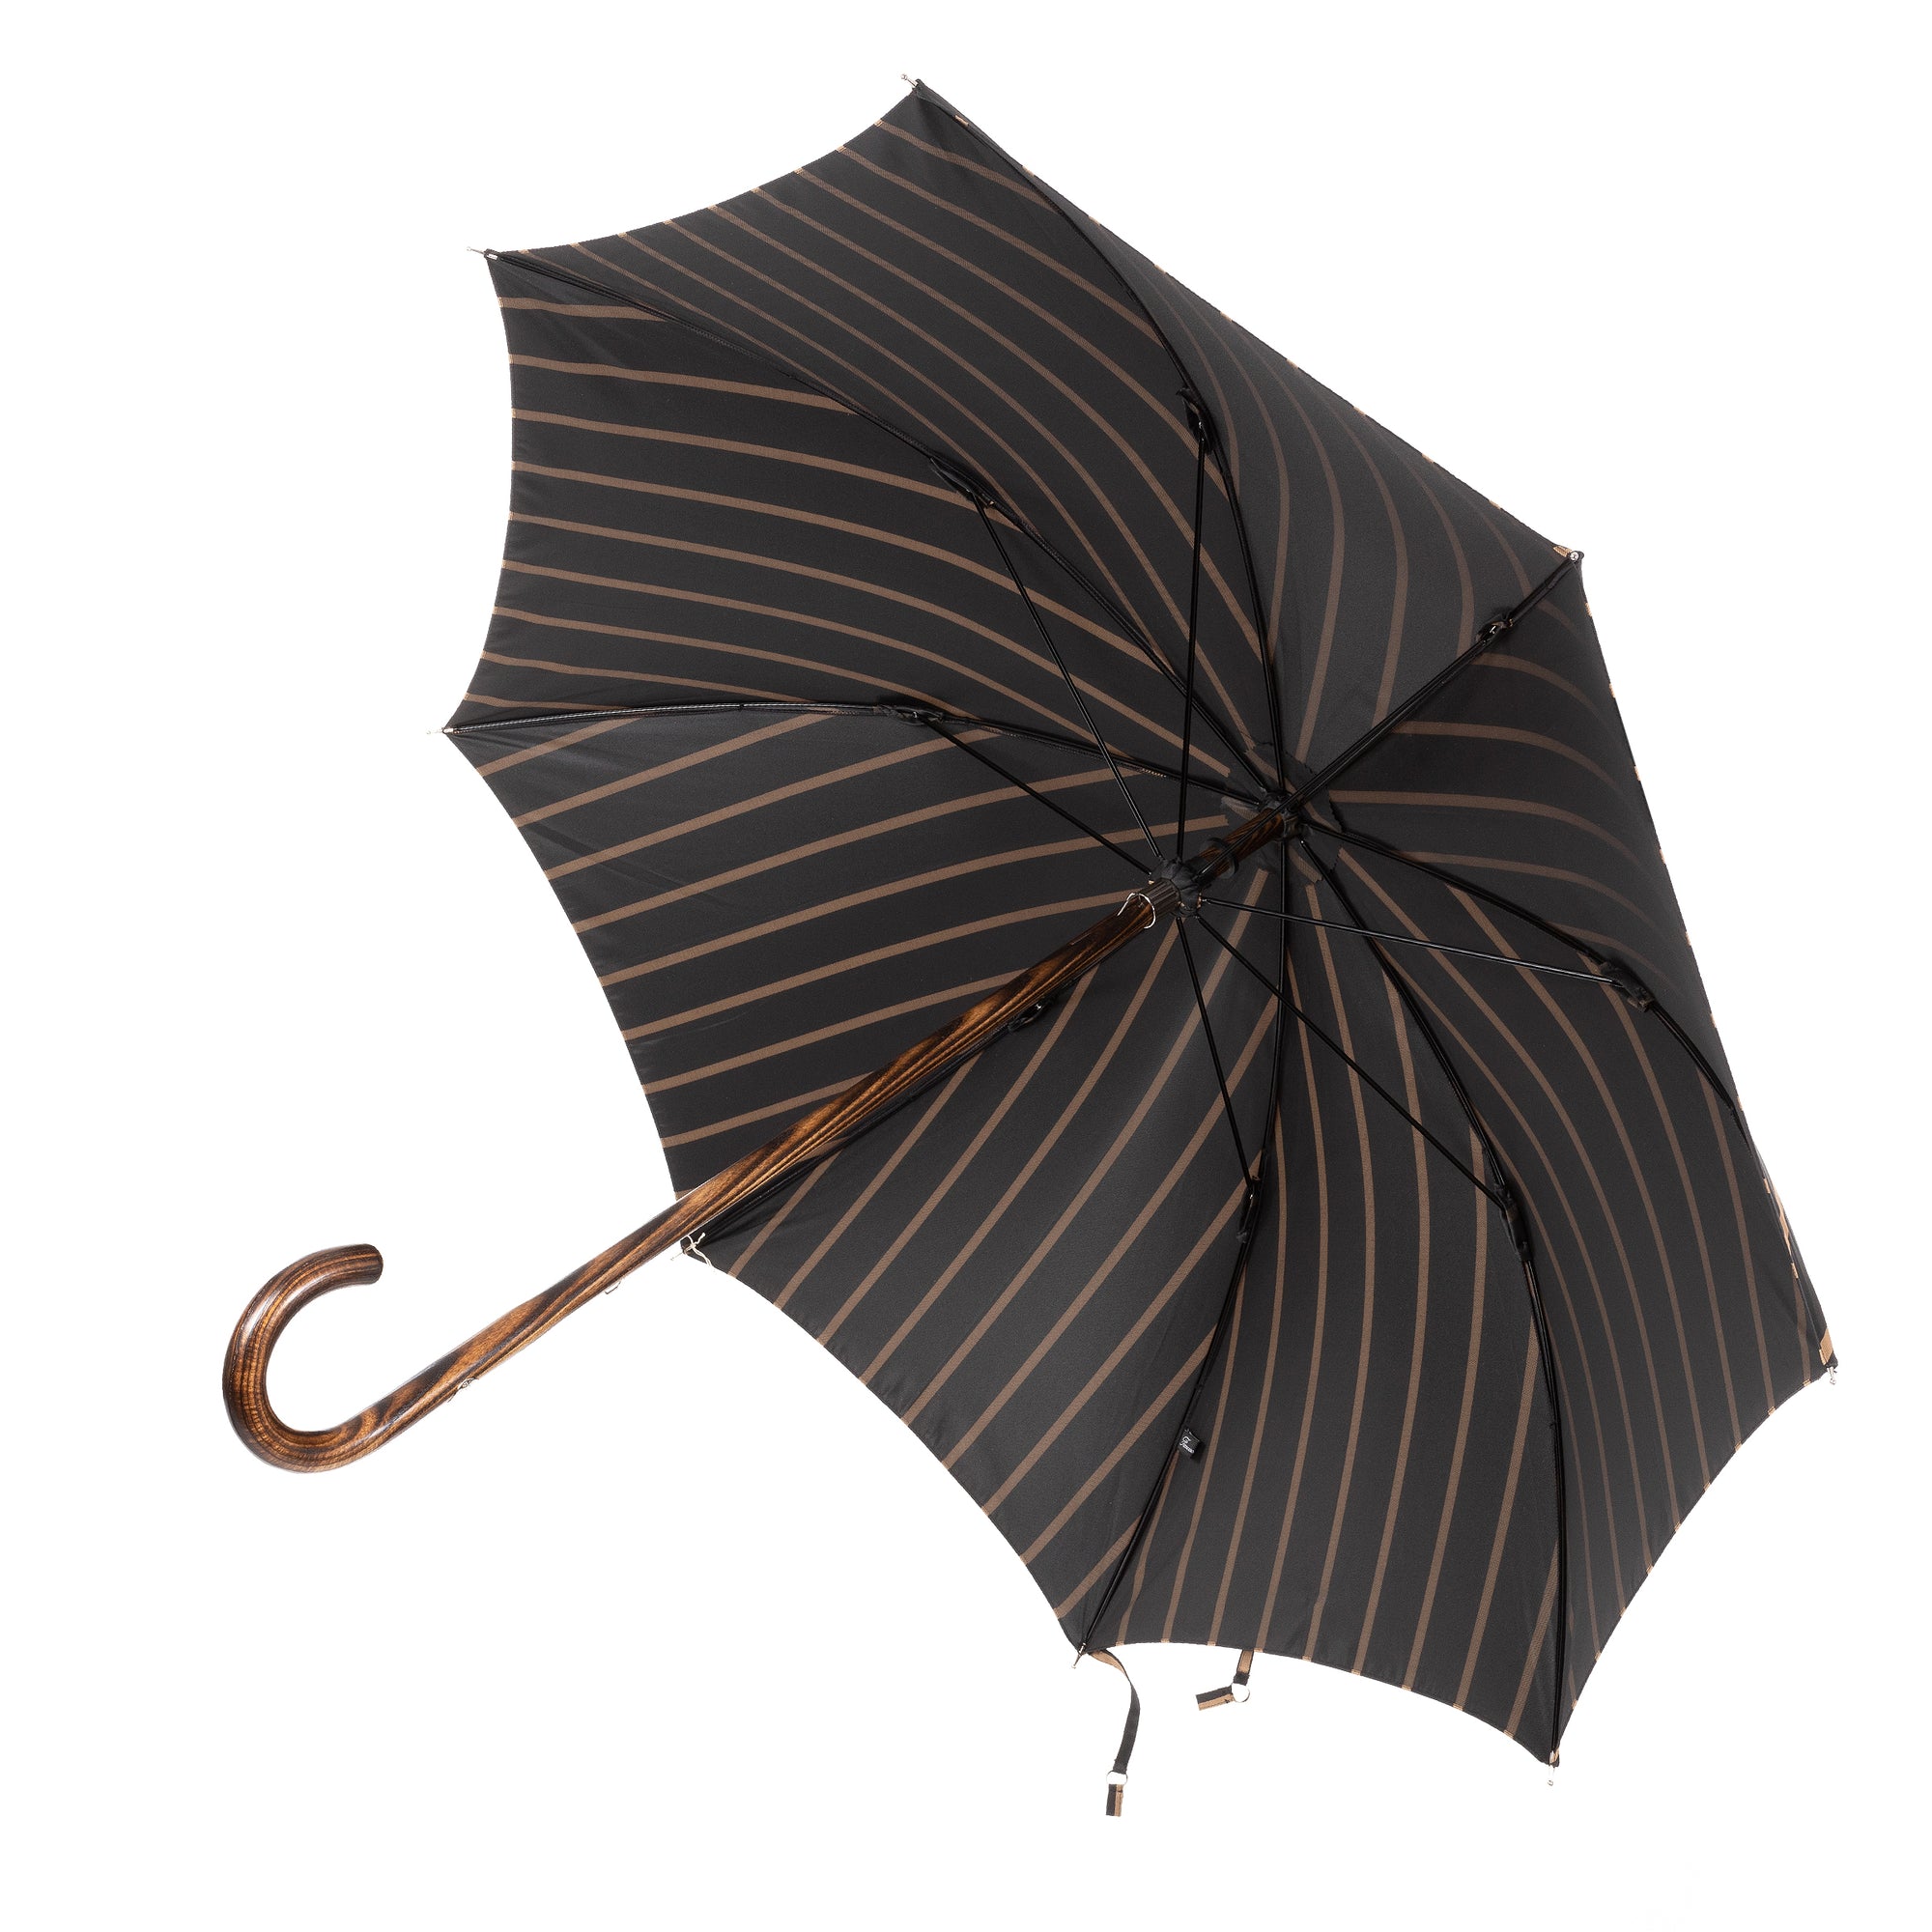 Flamed Beech Wood Umbrella